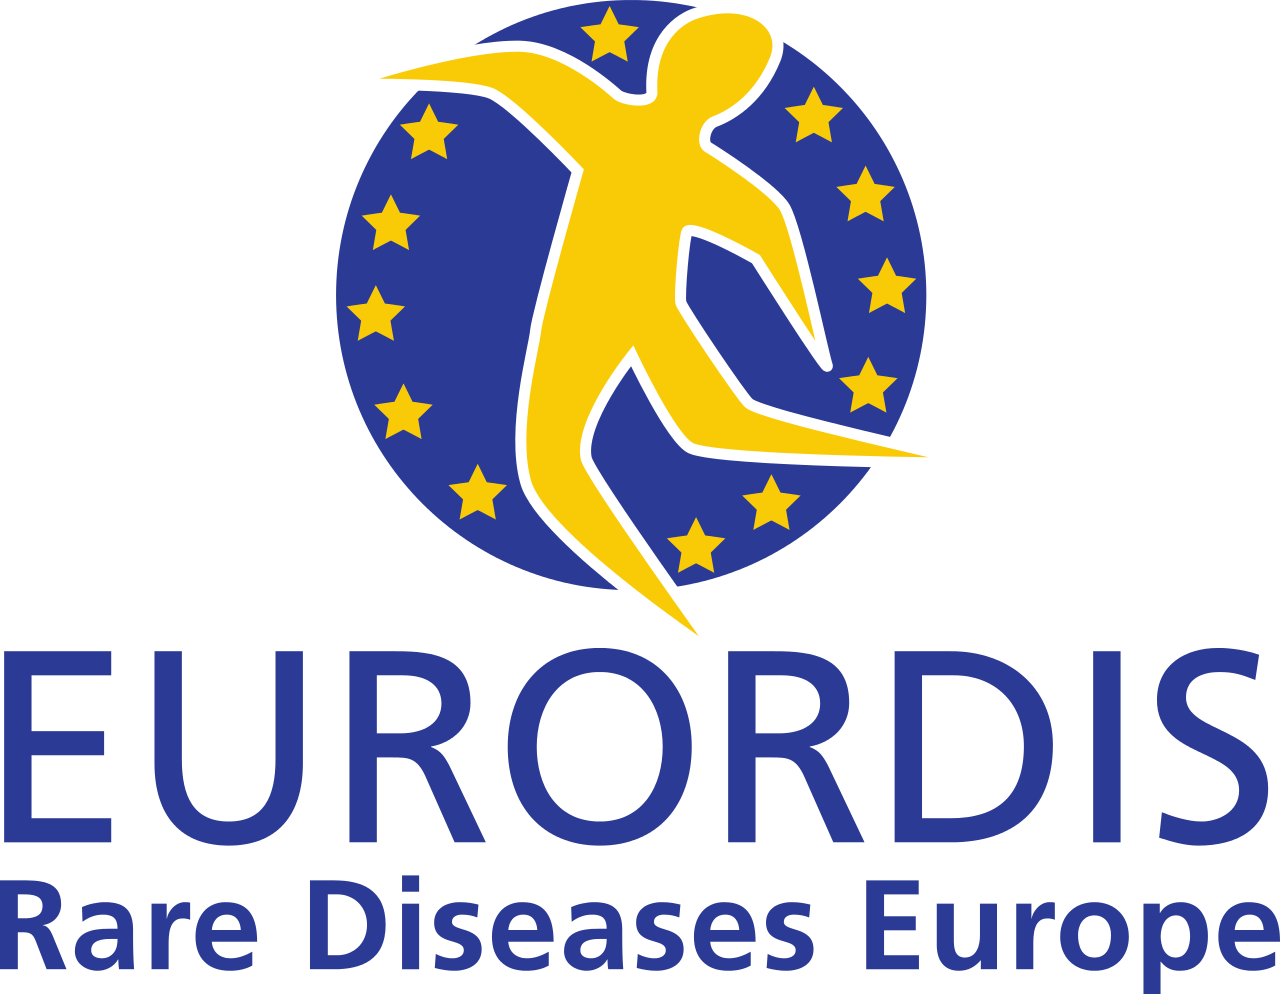 EURORDIS – Seltene Erkrankungen Europa (Rare Diseases Europe)